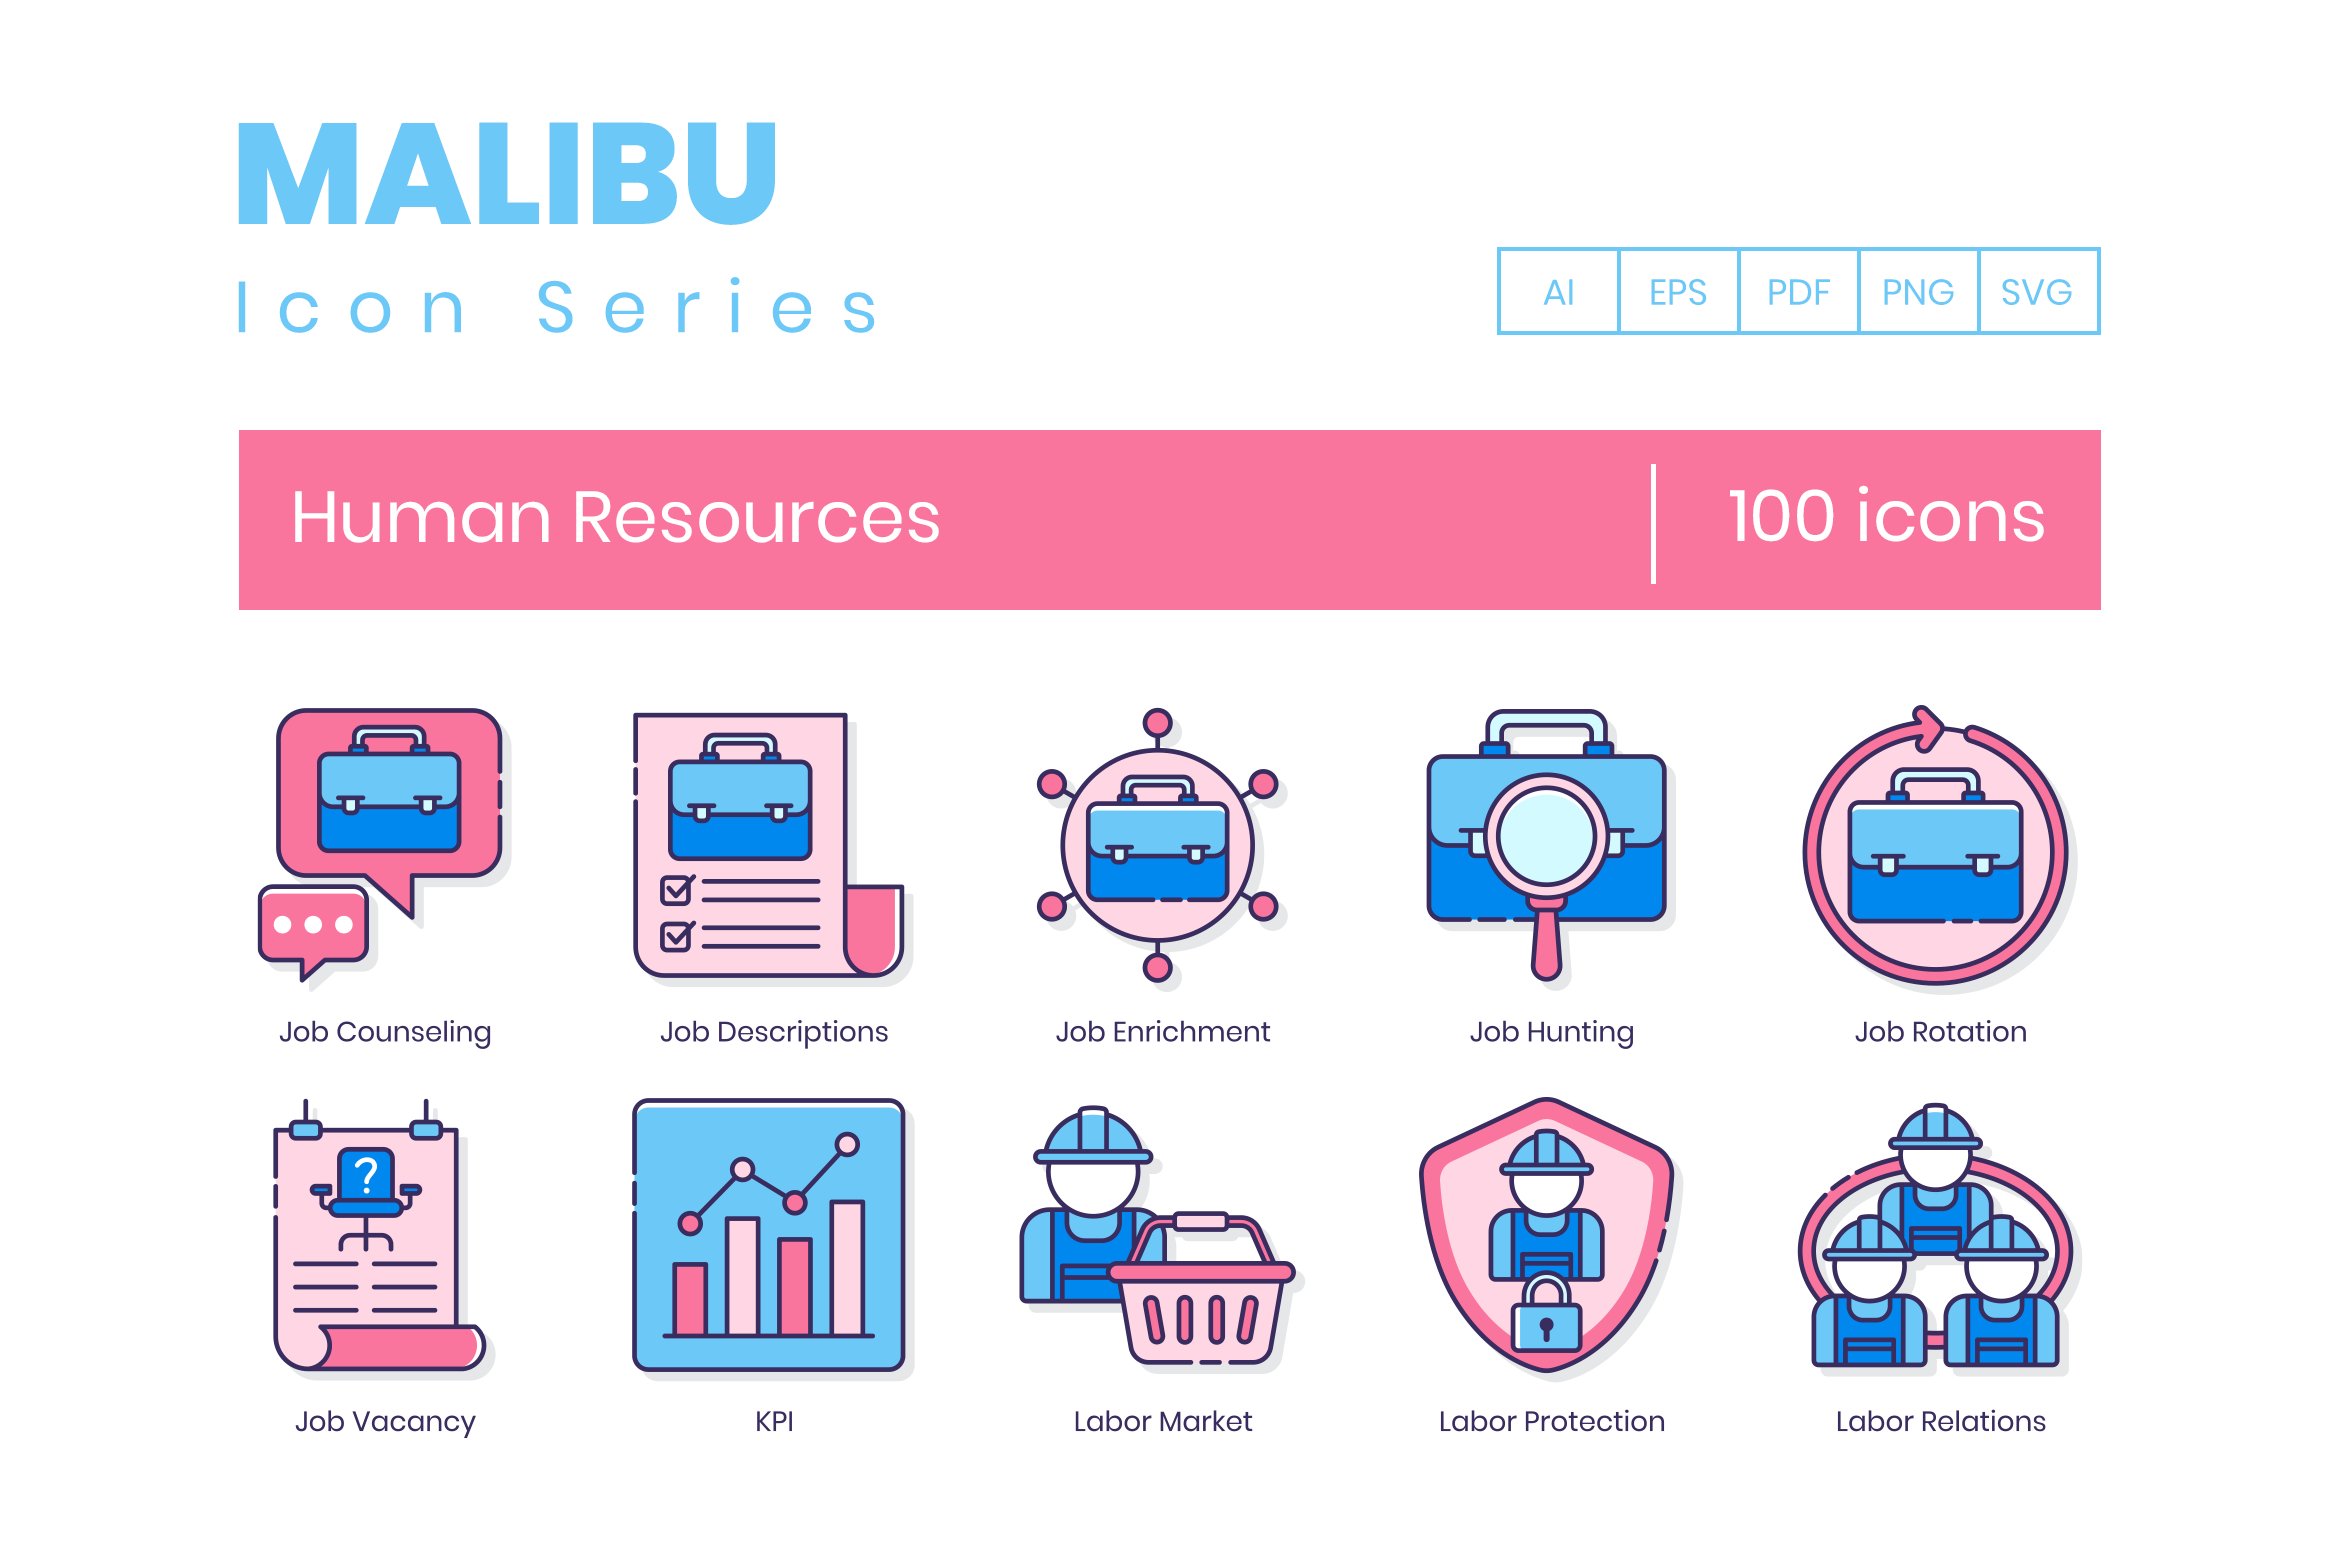 100 Human Resources Icons - Malibu cover image.